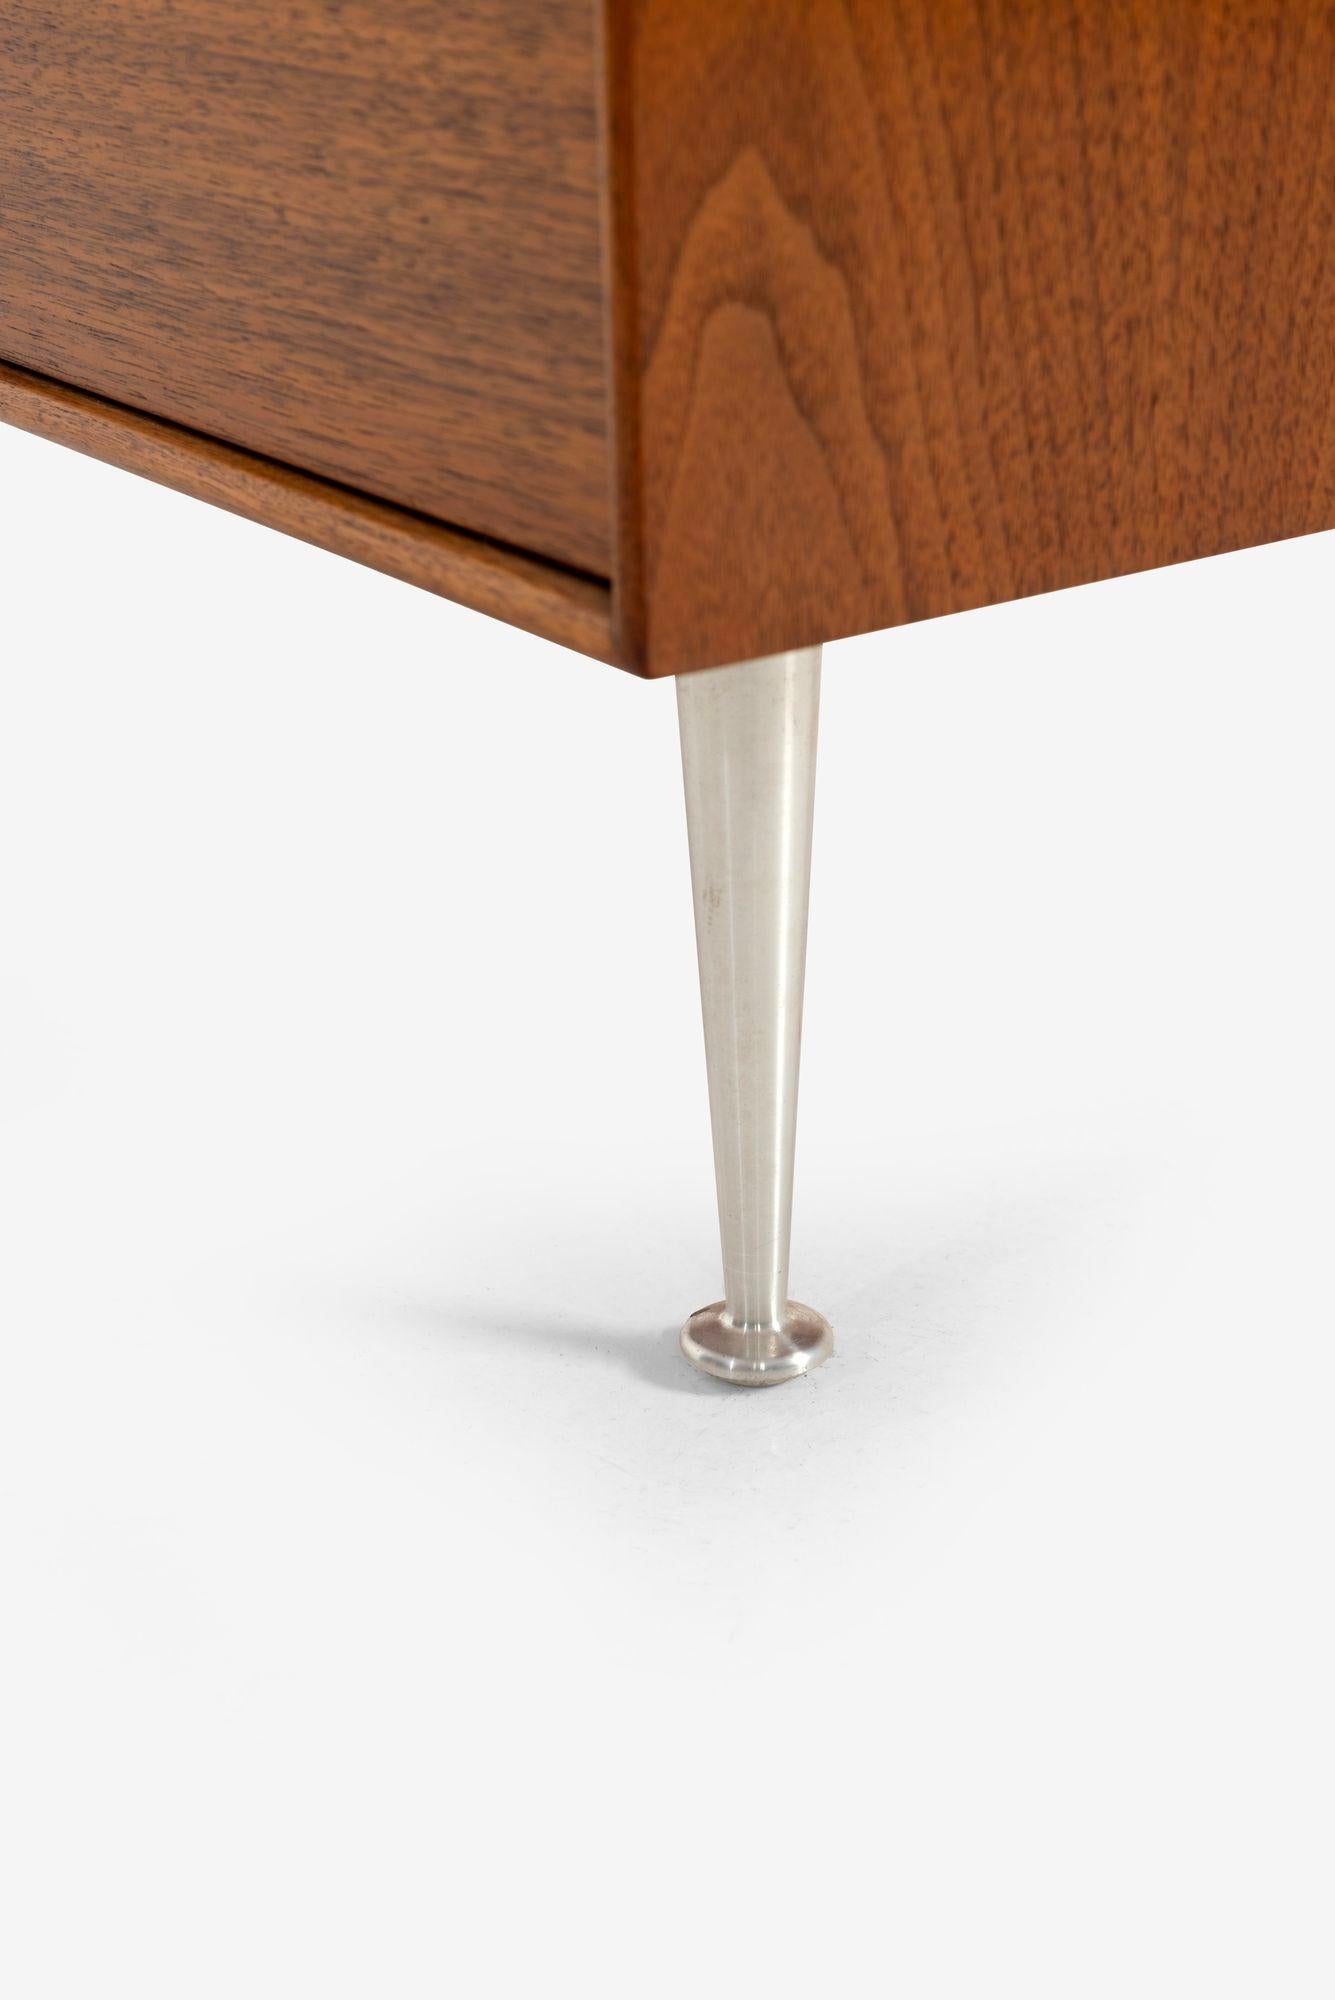 George Nelson for Herman Miller 4-Drawer Thin Edge Cabinet with Rare Pulls (Armoire à 4 tiroirs à bord fin et à poignées rares) 4